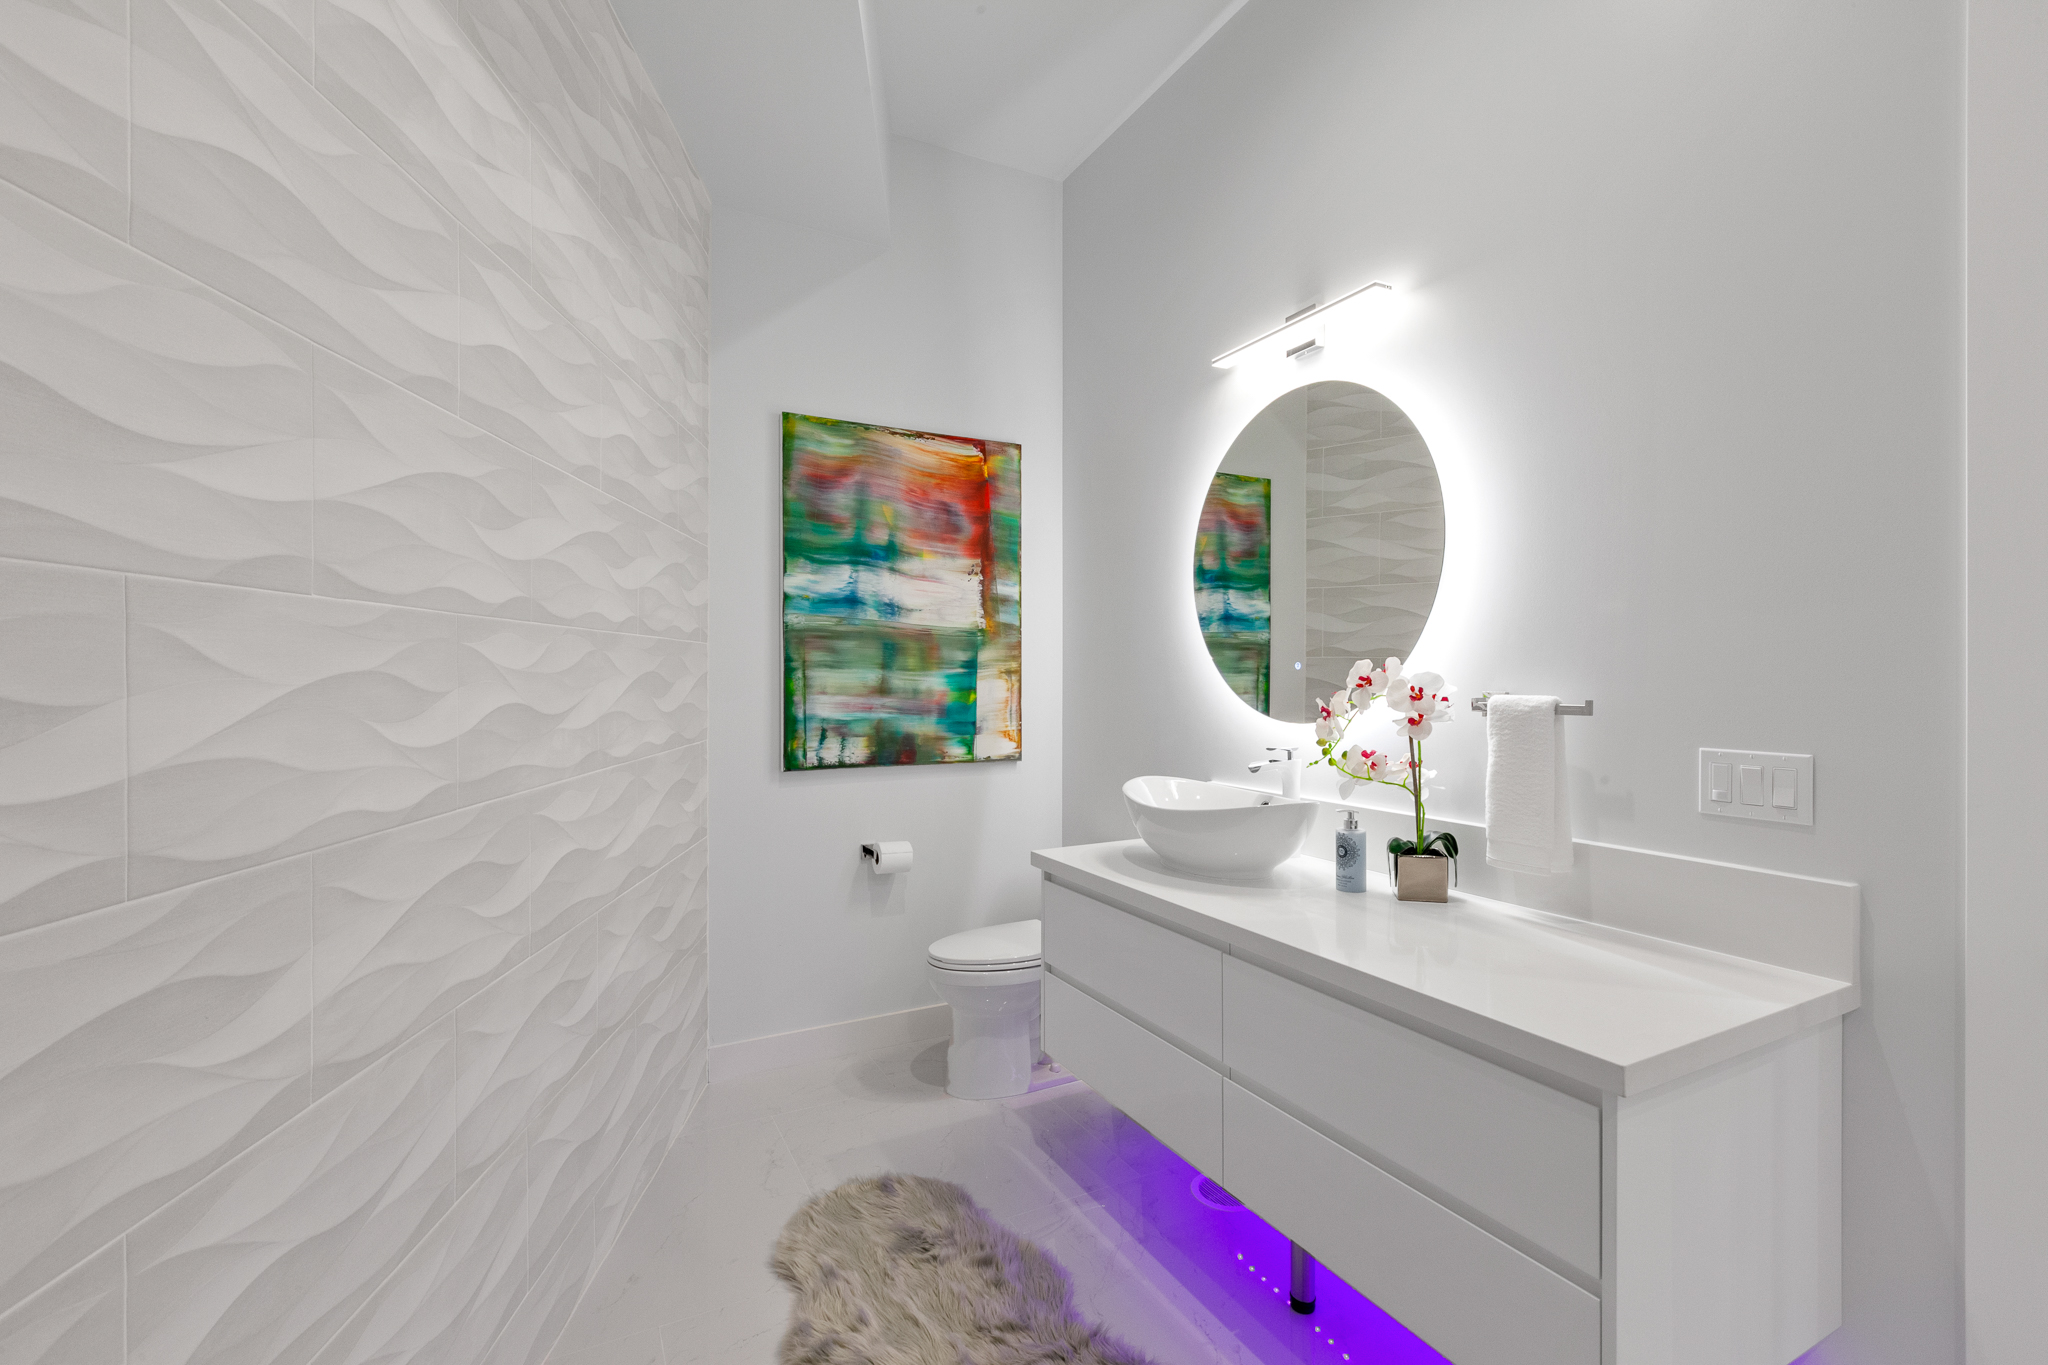 Bathroom - Luxury Real Estate - 18109 84th Ave W, Edmonds